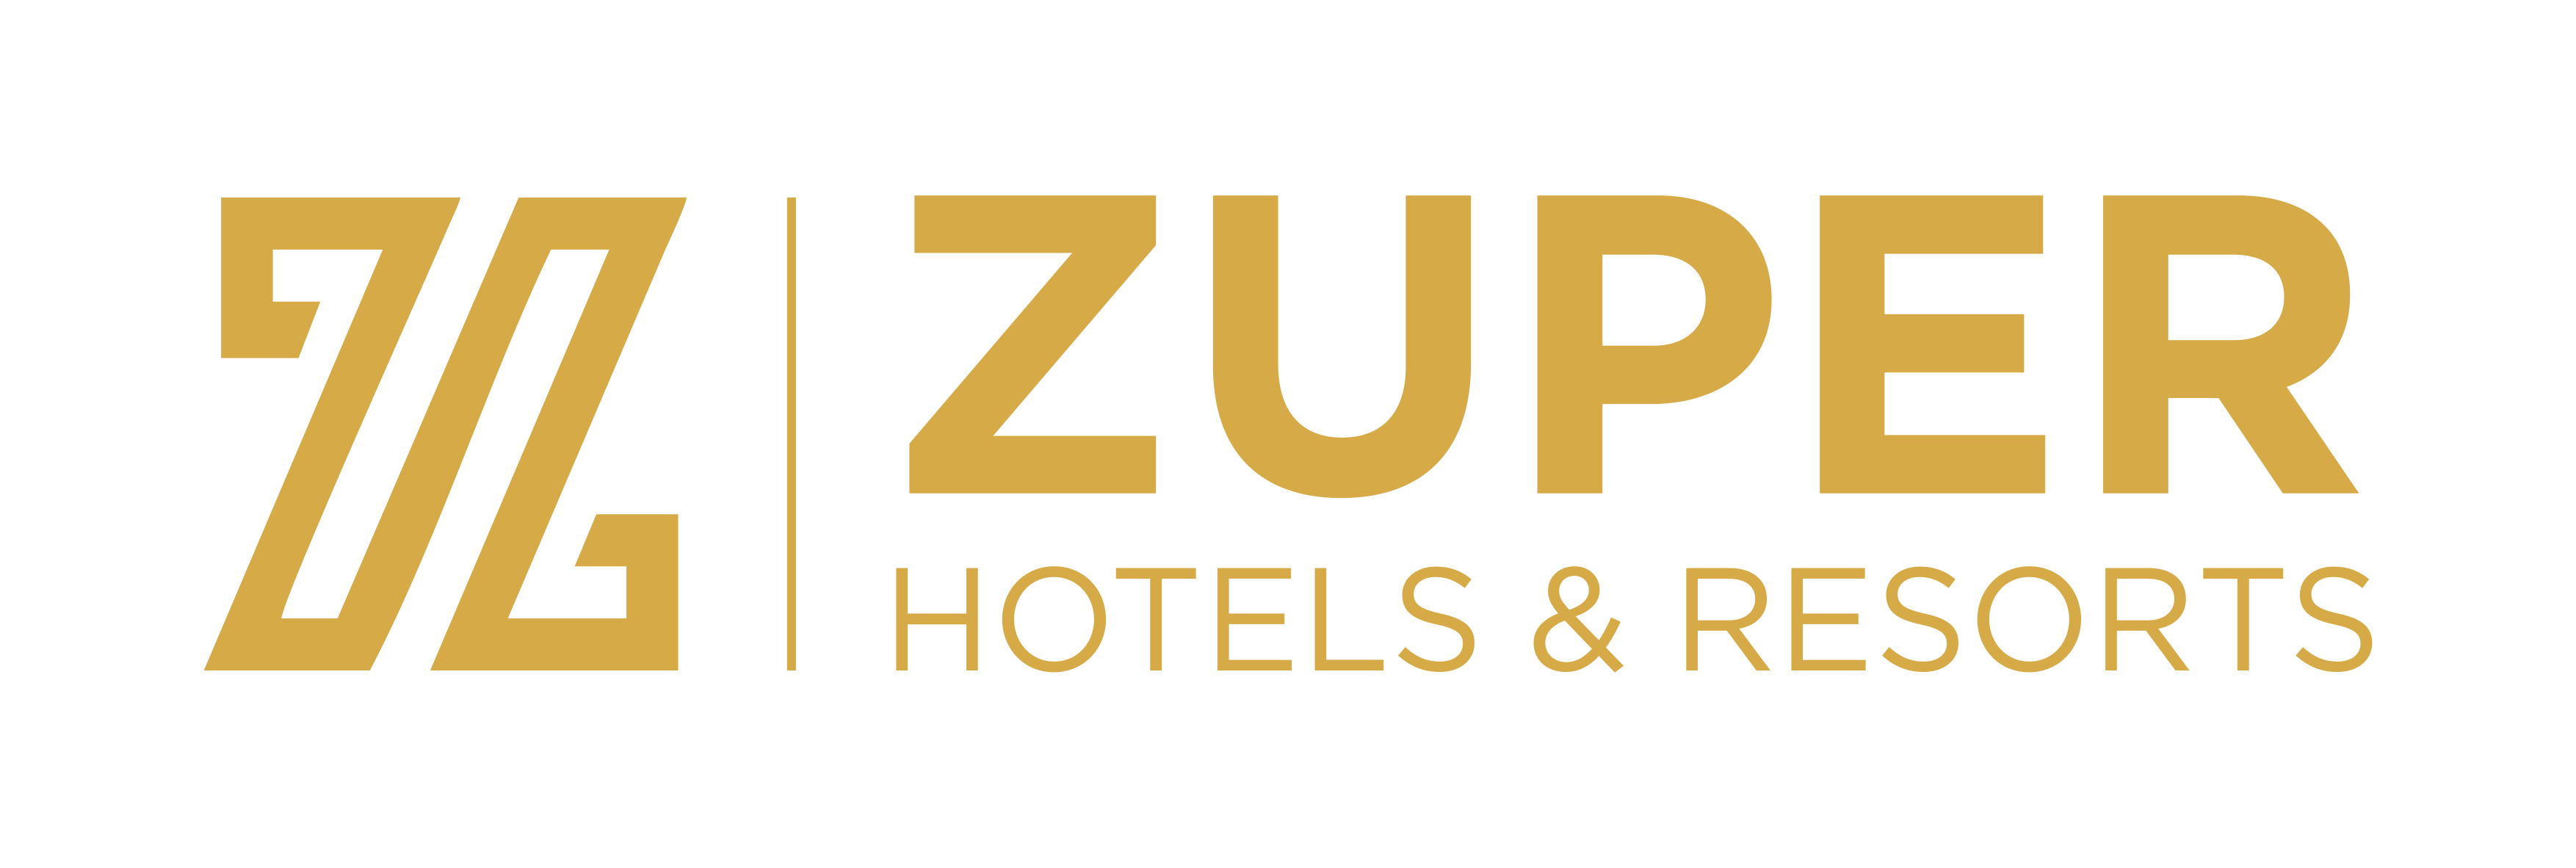 Top Hotel & Resort Marketing Company in India